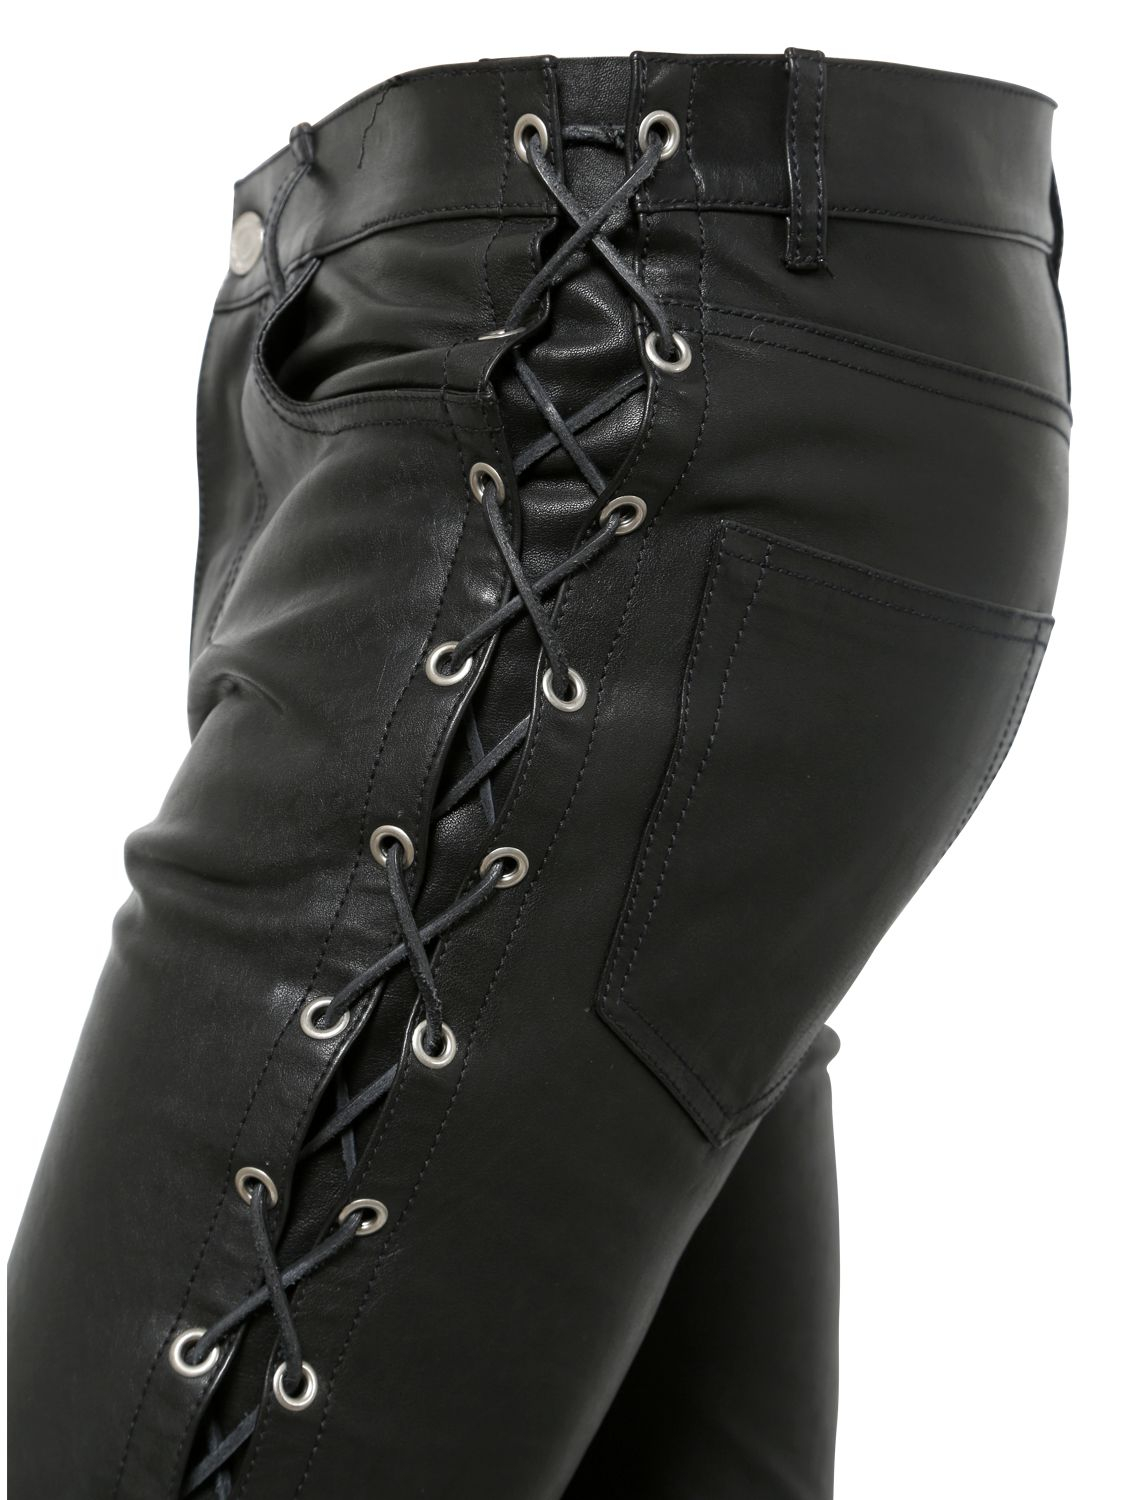 Lyst - Saint Laurent 15Cm Skinny Lace-Up Leather Jeans in Black for Men